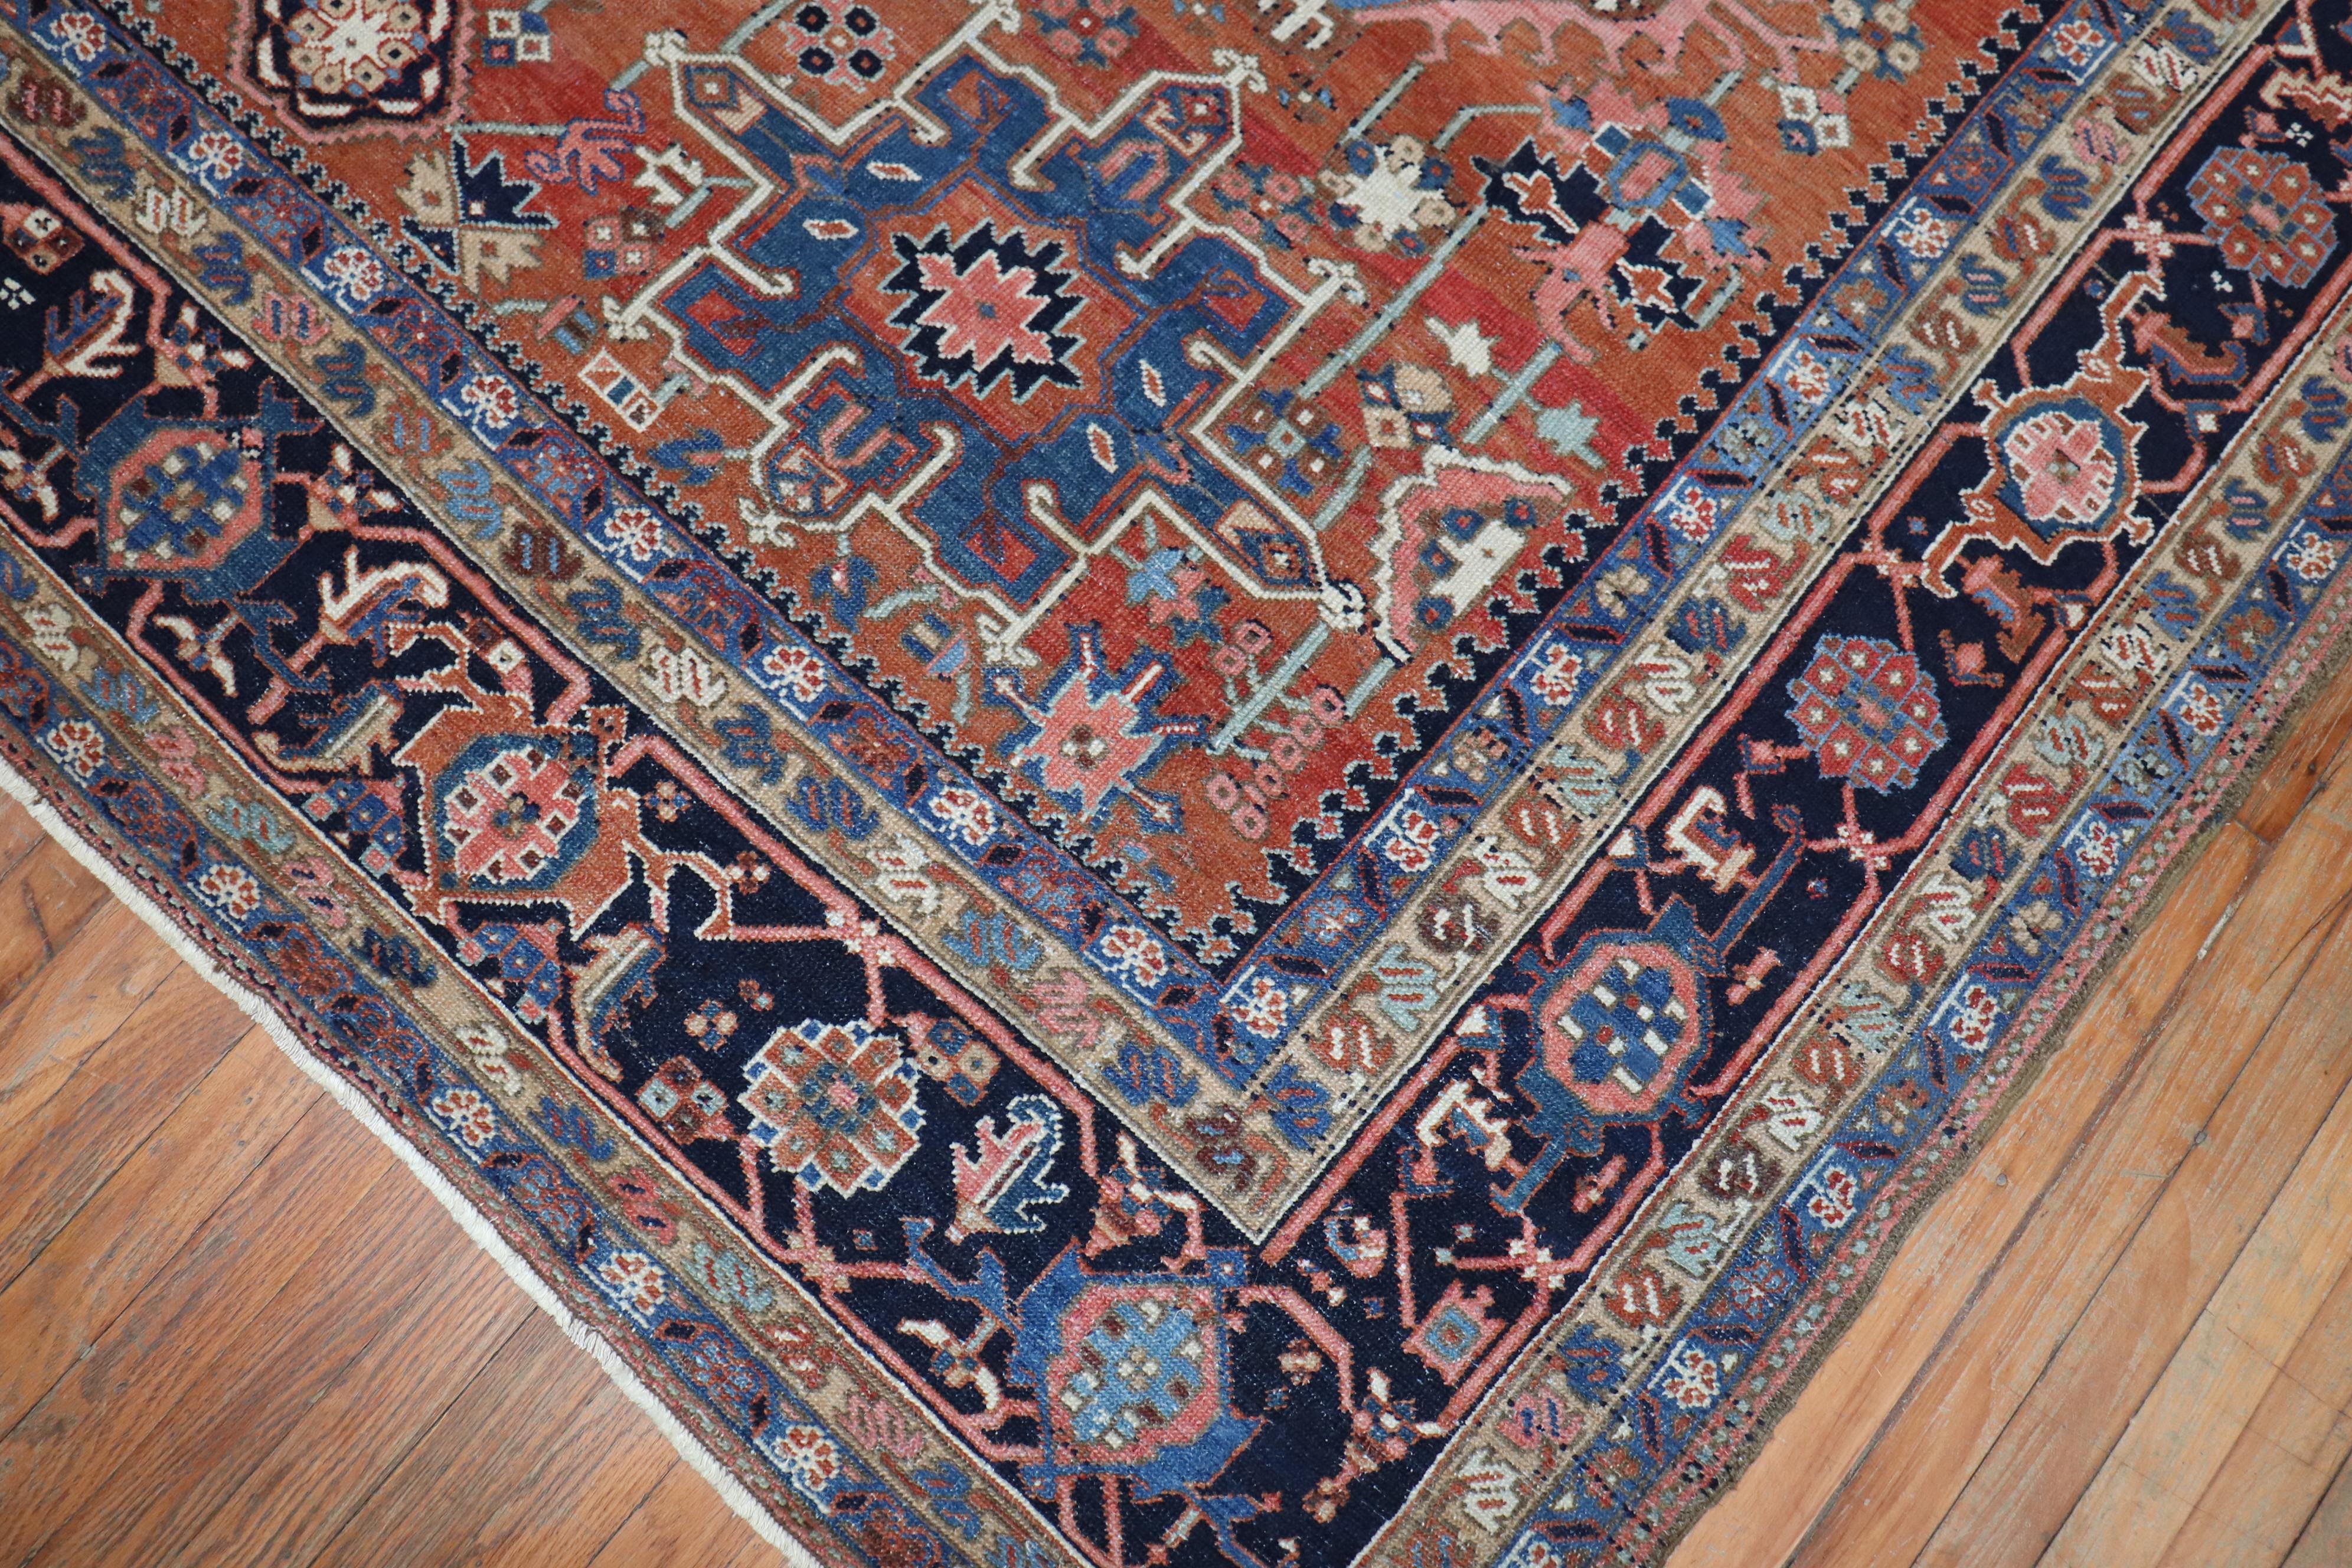 Hand-Woven Rustic Geometric Antique Persian Heriz Karadja Carpet, Early 20th Century